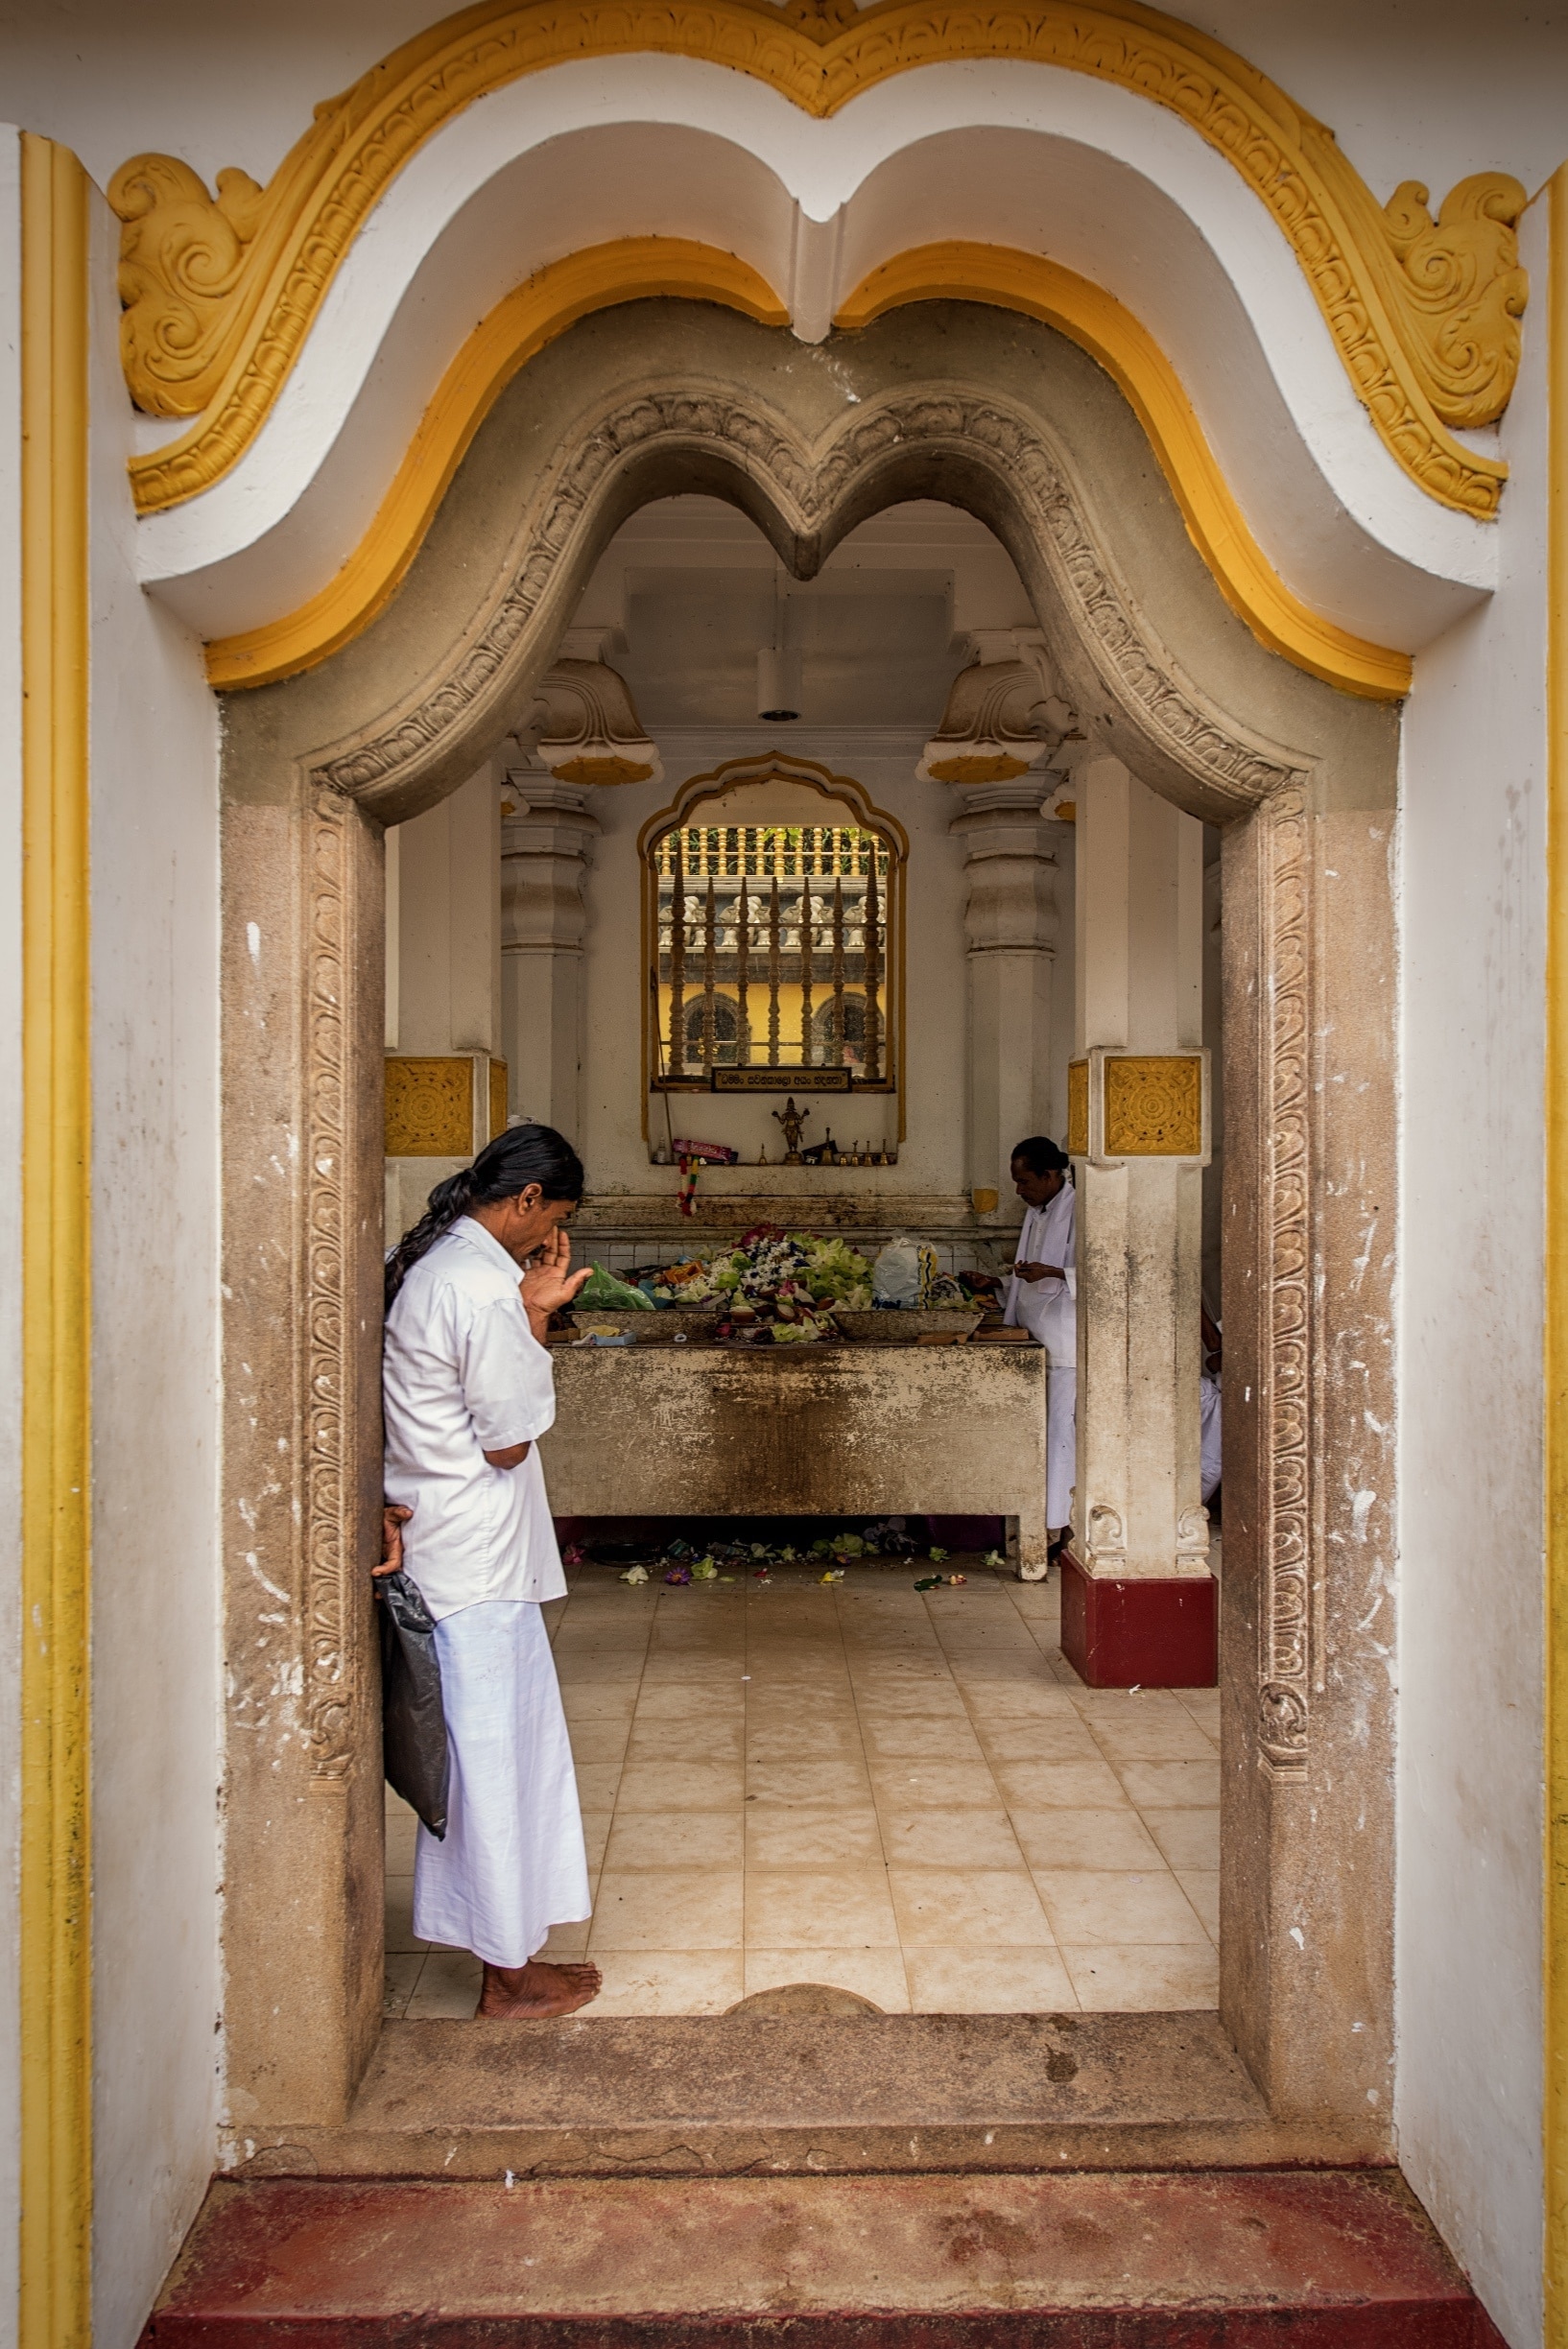 Offerings at the jaya sri maha bodhi or the temple of the sacred bodhi tree in anuradhapura, Sri Lanka #petersoeteweyphotography #wanderlust #srilanka #anuradhapura #jayasrimahabodi #sacredbodhithree